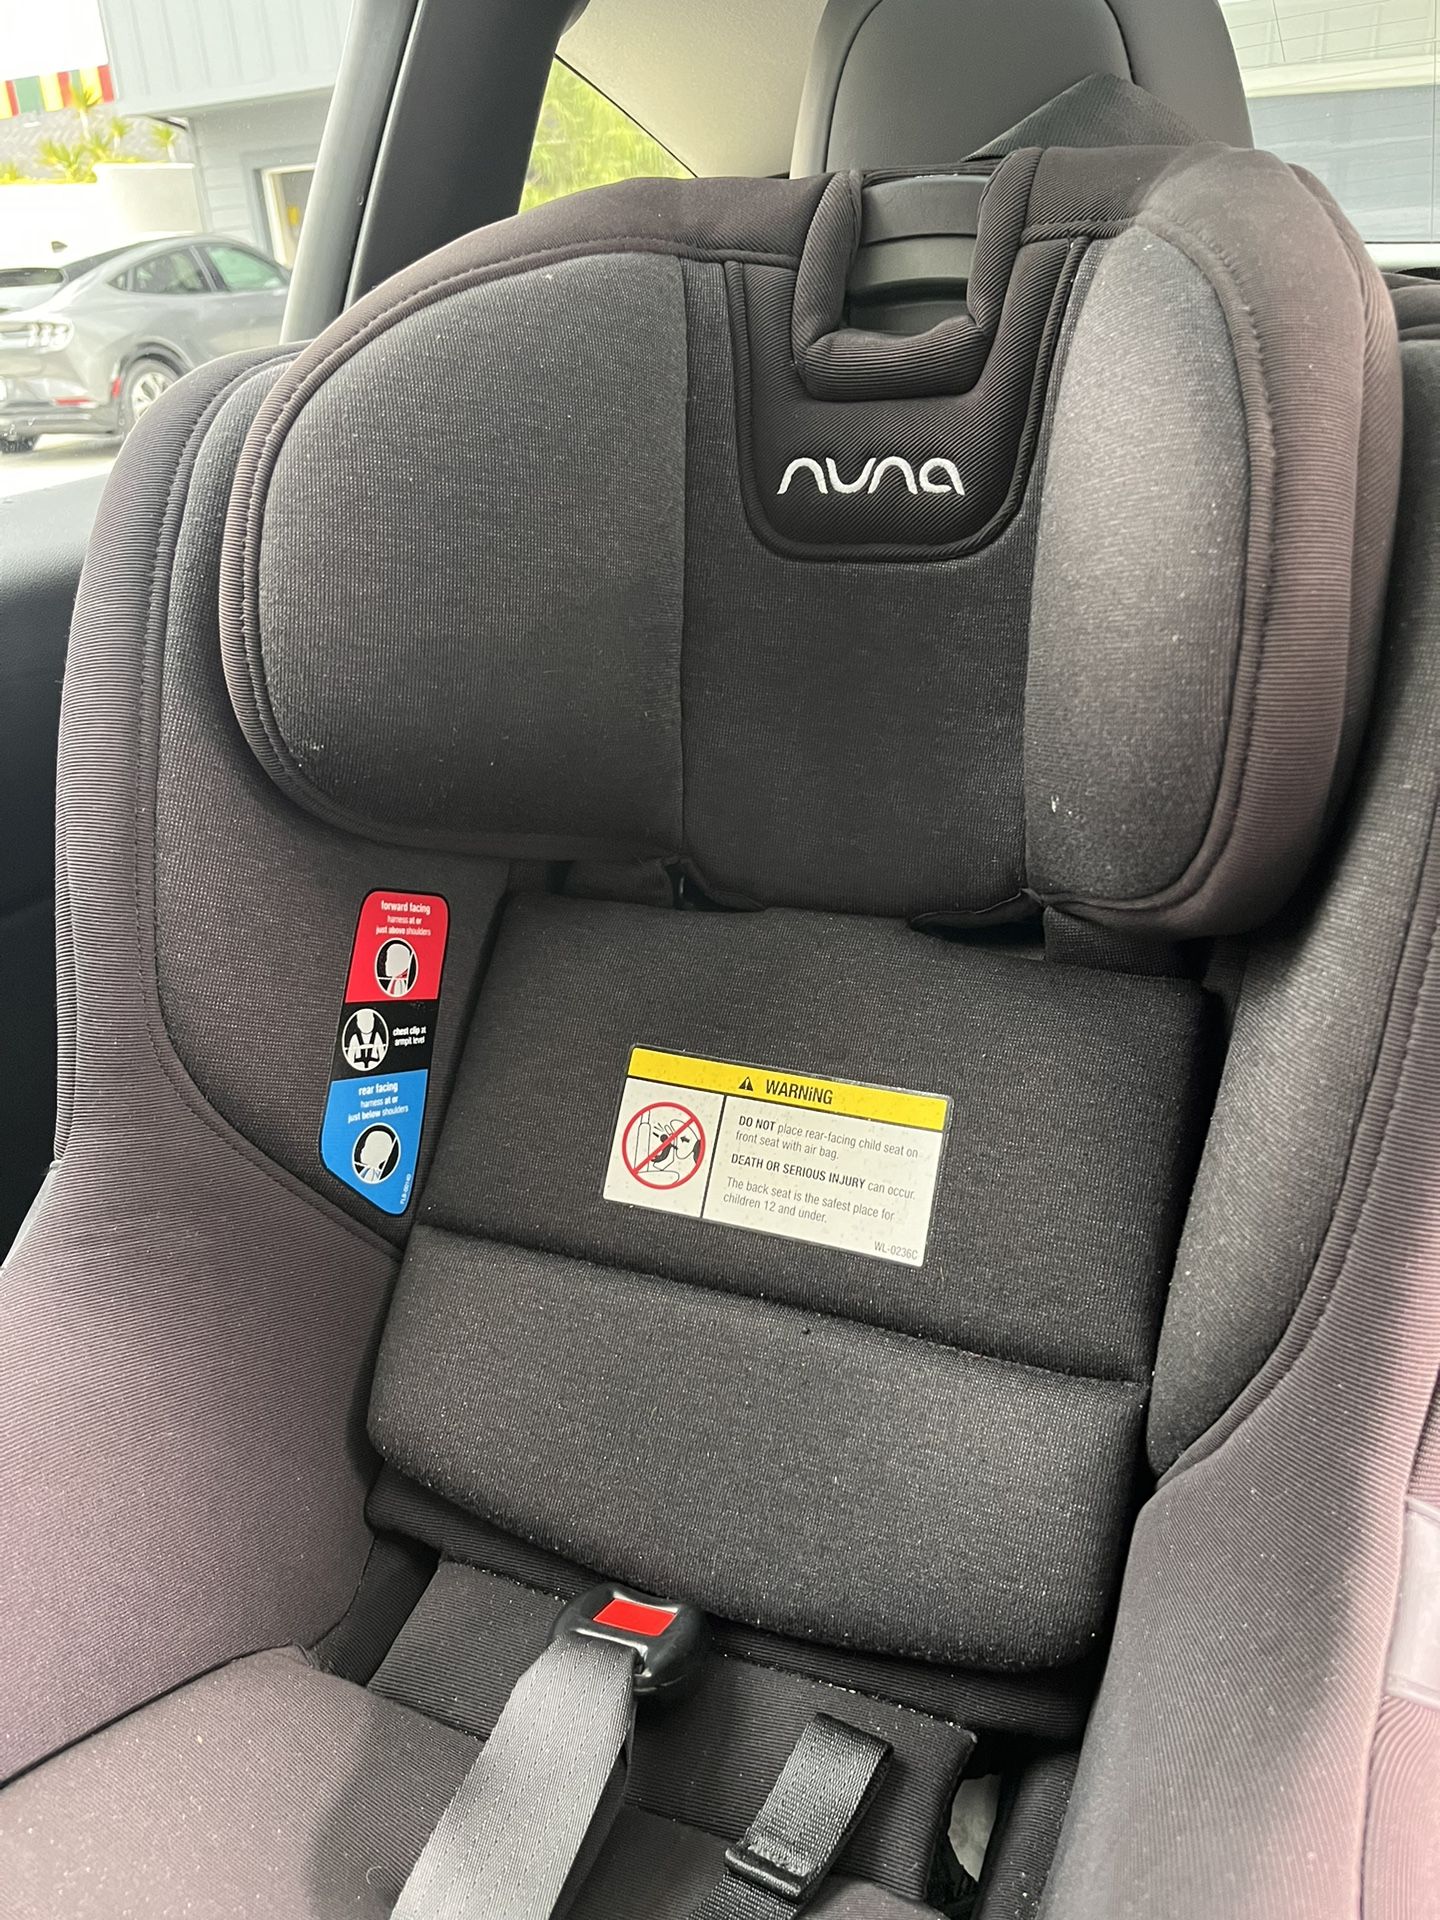 Nuna Rava Car Seat 